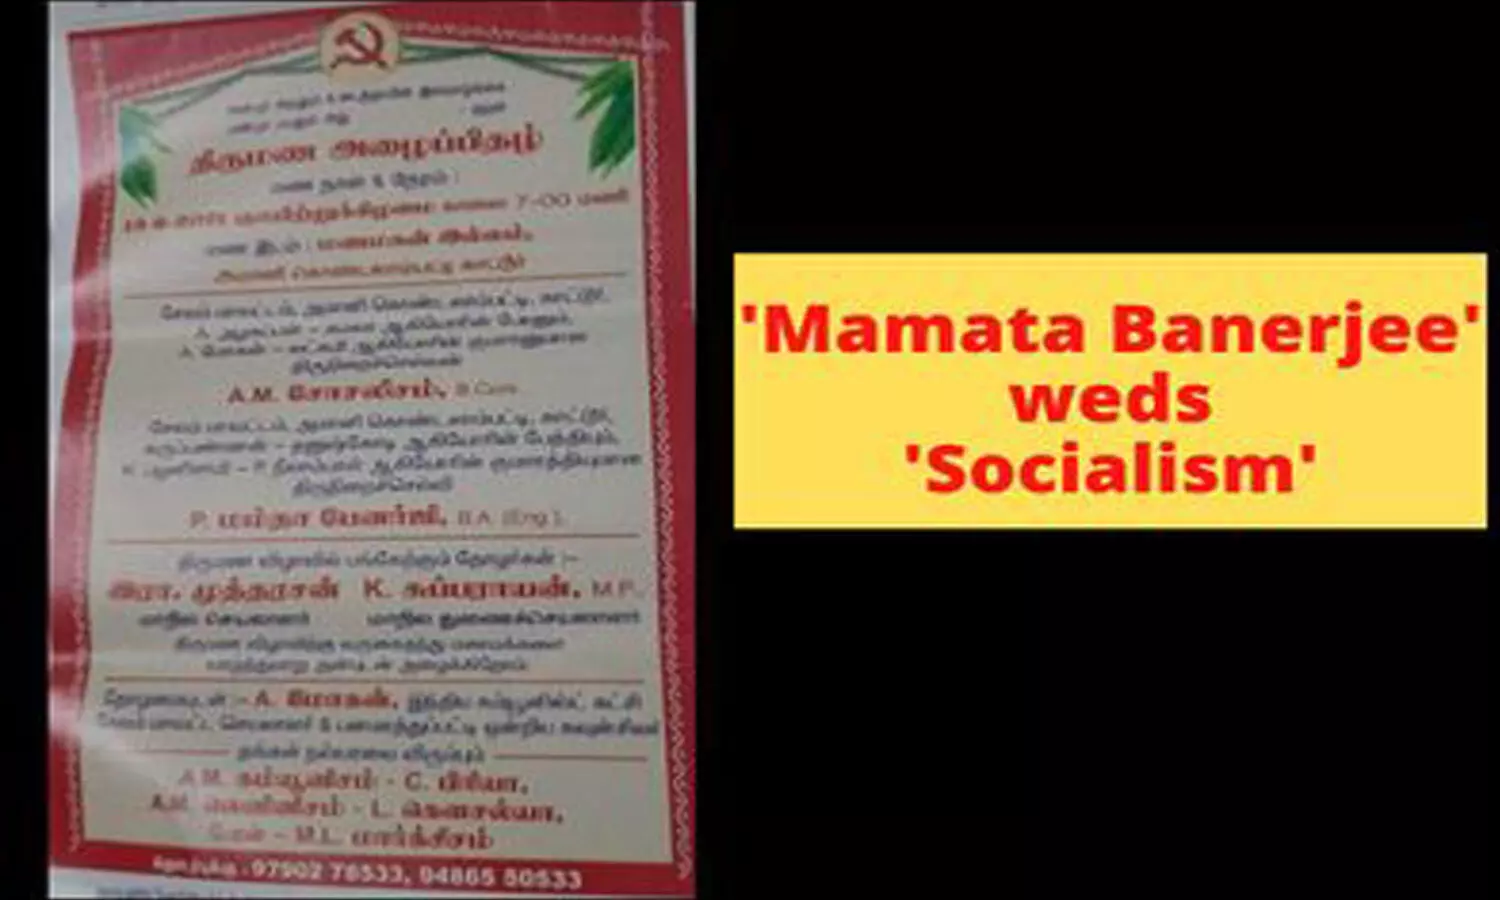 BUZZ: Mamata Banerjee to marry AM Socialism, wedding invitation goes viral